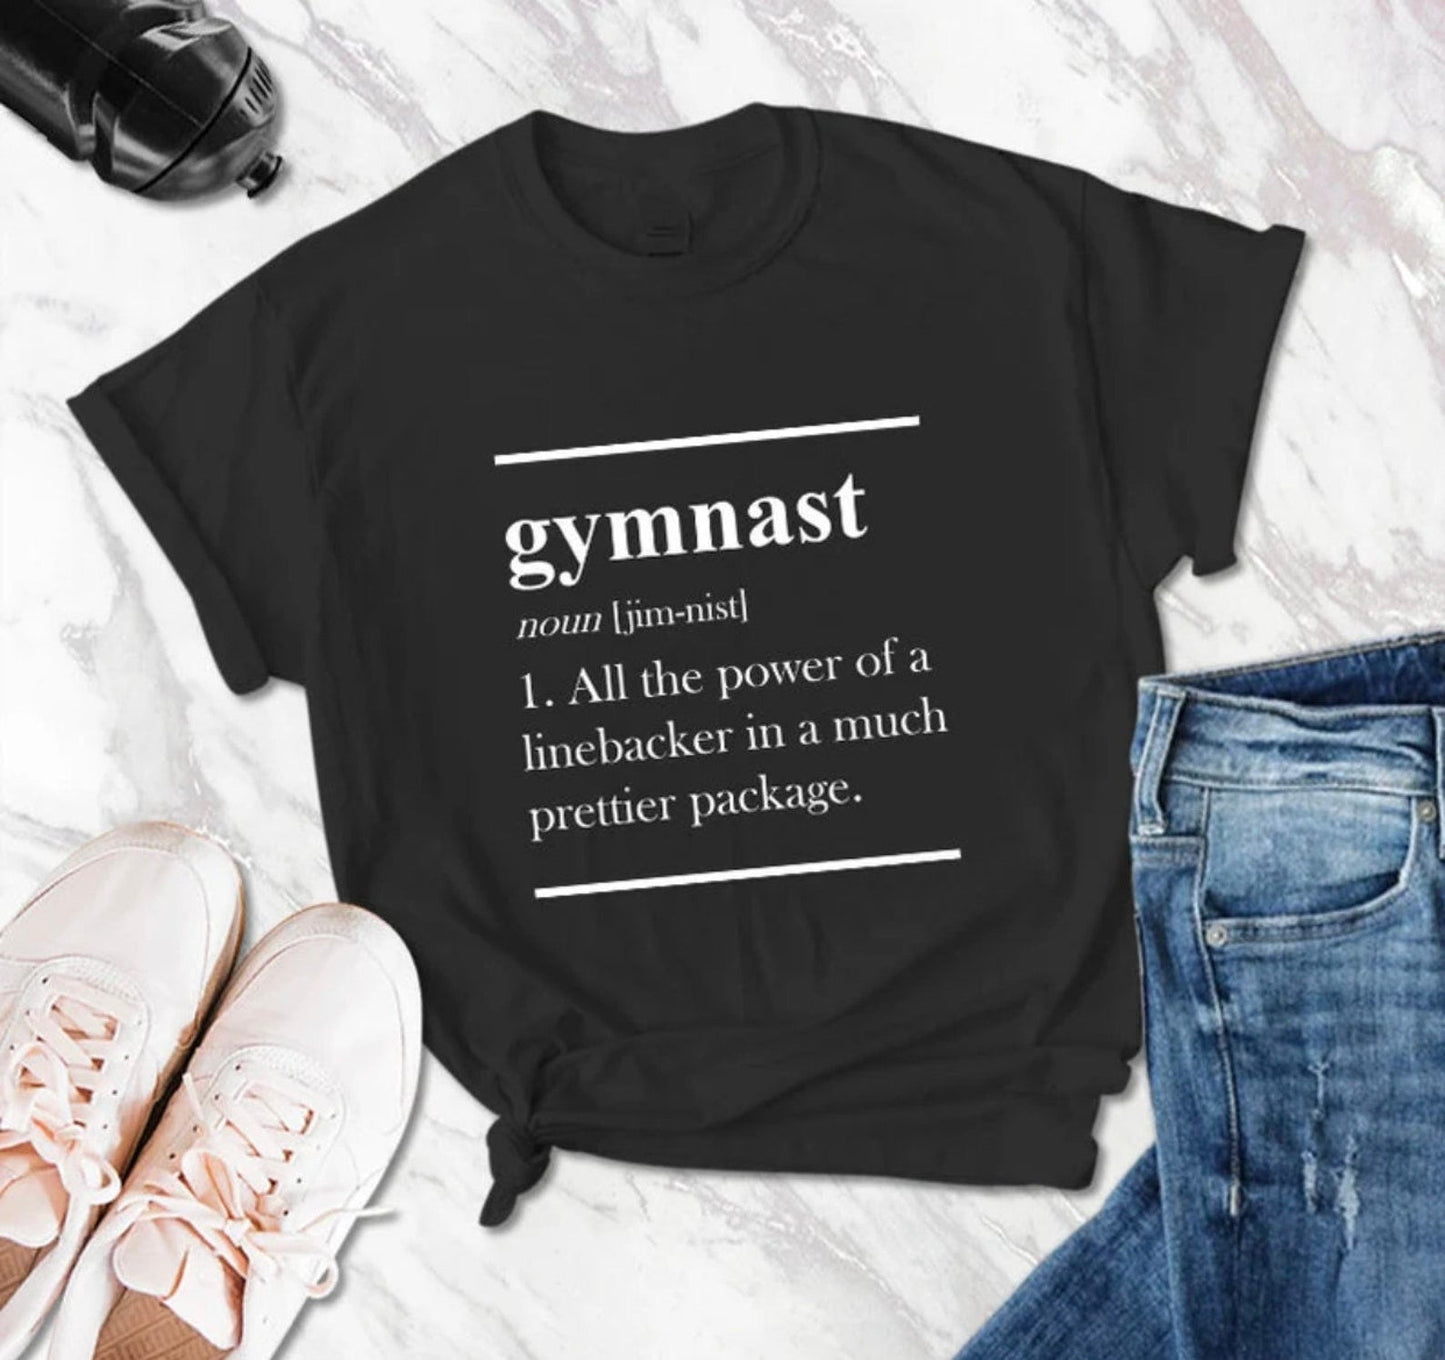 Gymnast shirt| Definition of a Gymnast shirt| Gymnast tee LONG SLEEVE